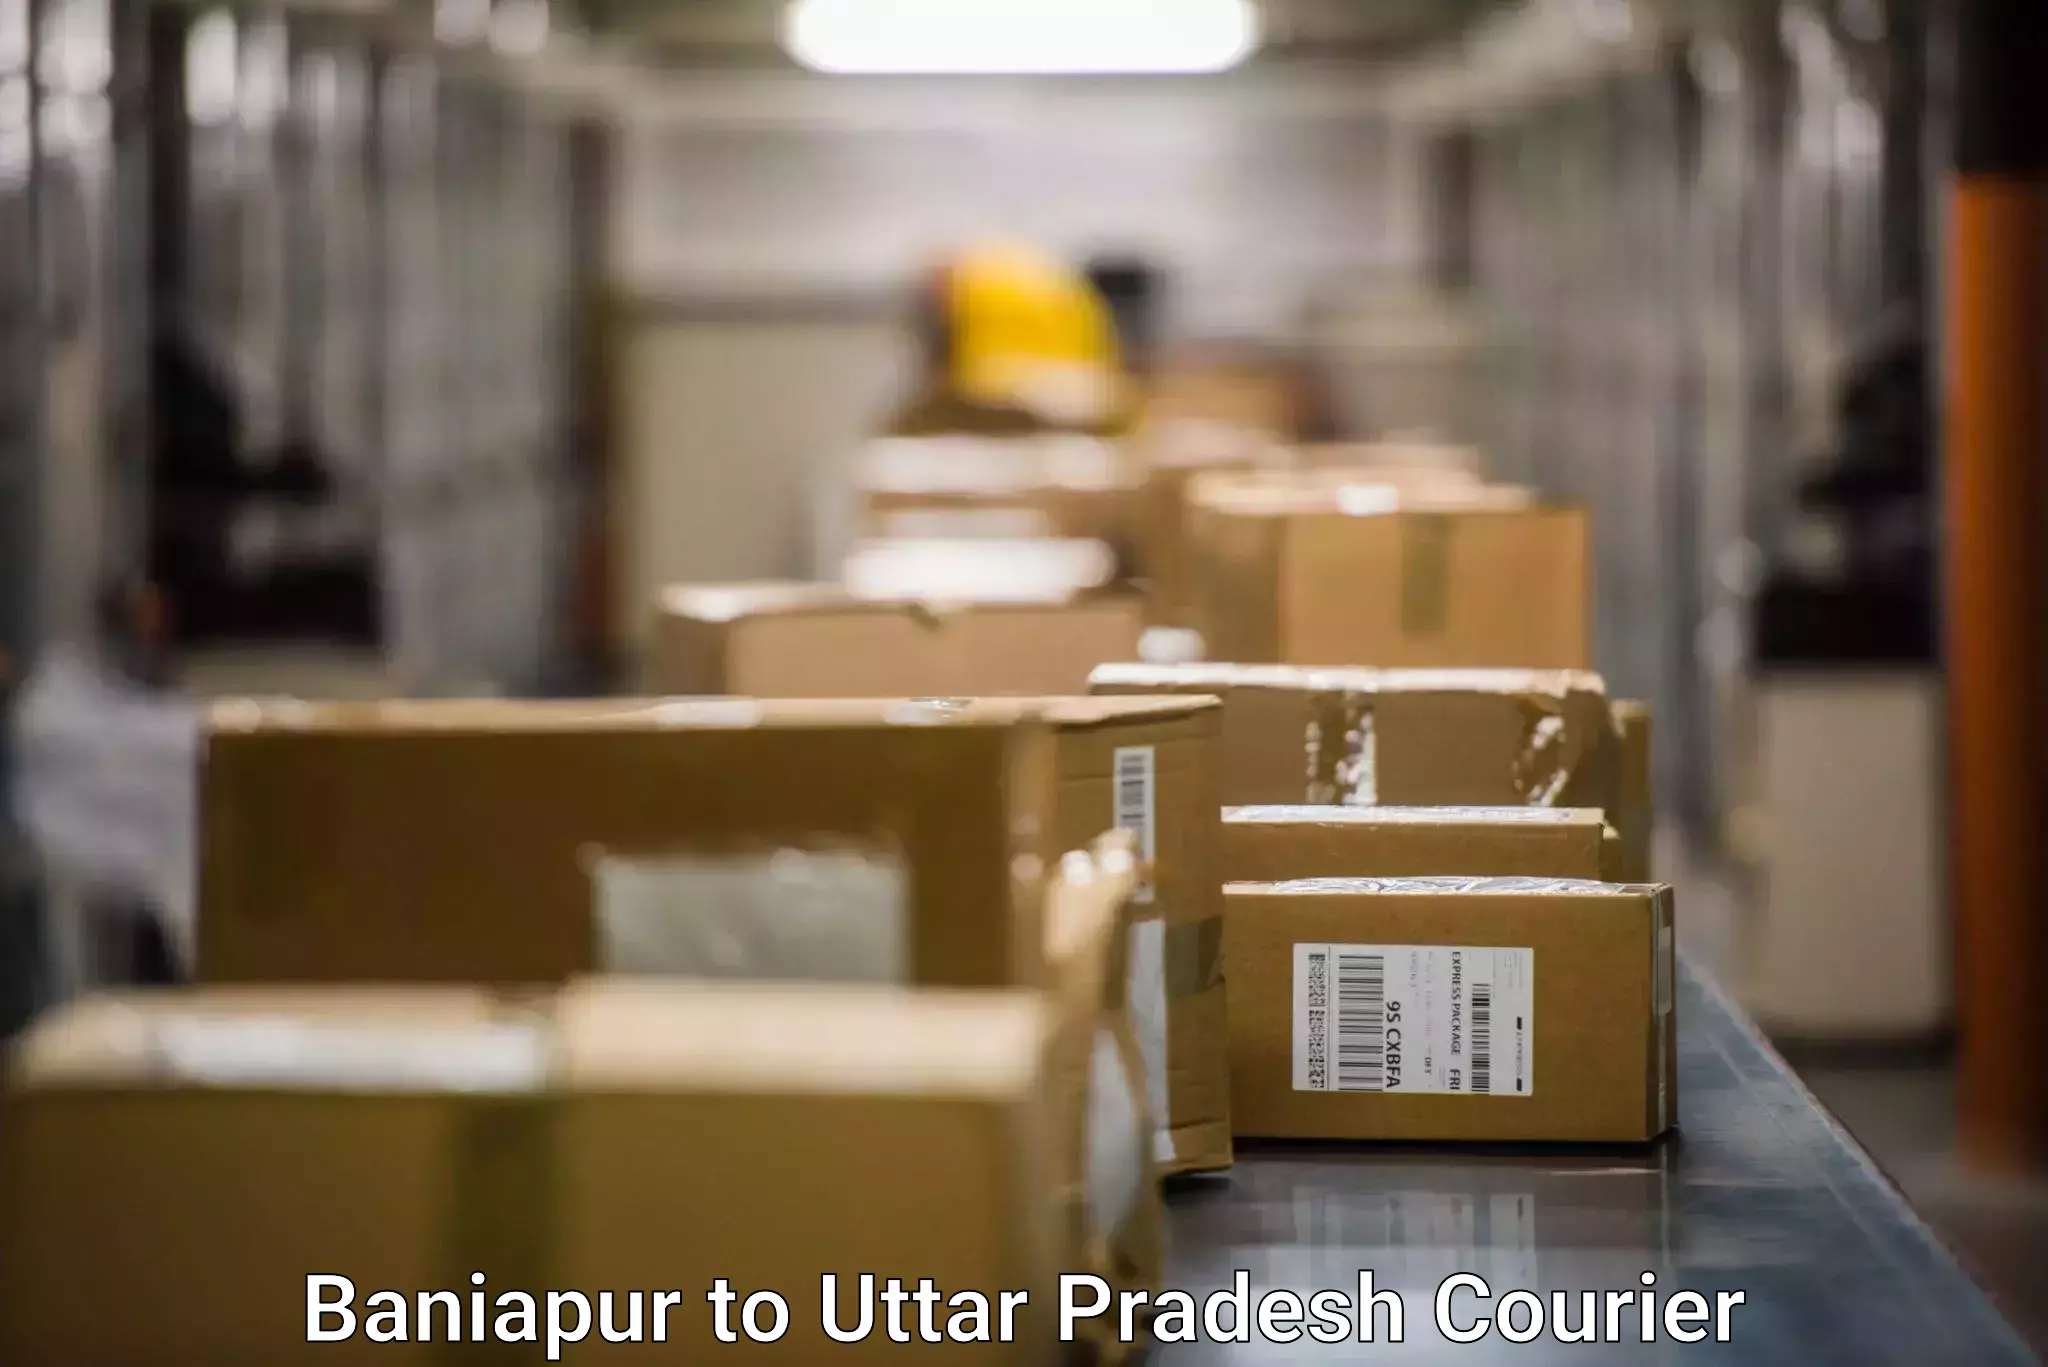 Speedy delivery service Baniapur to Ambedkar Nagar